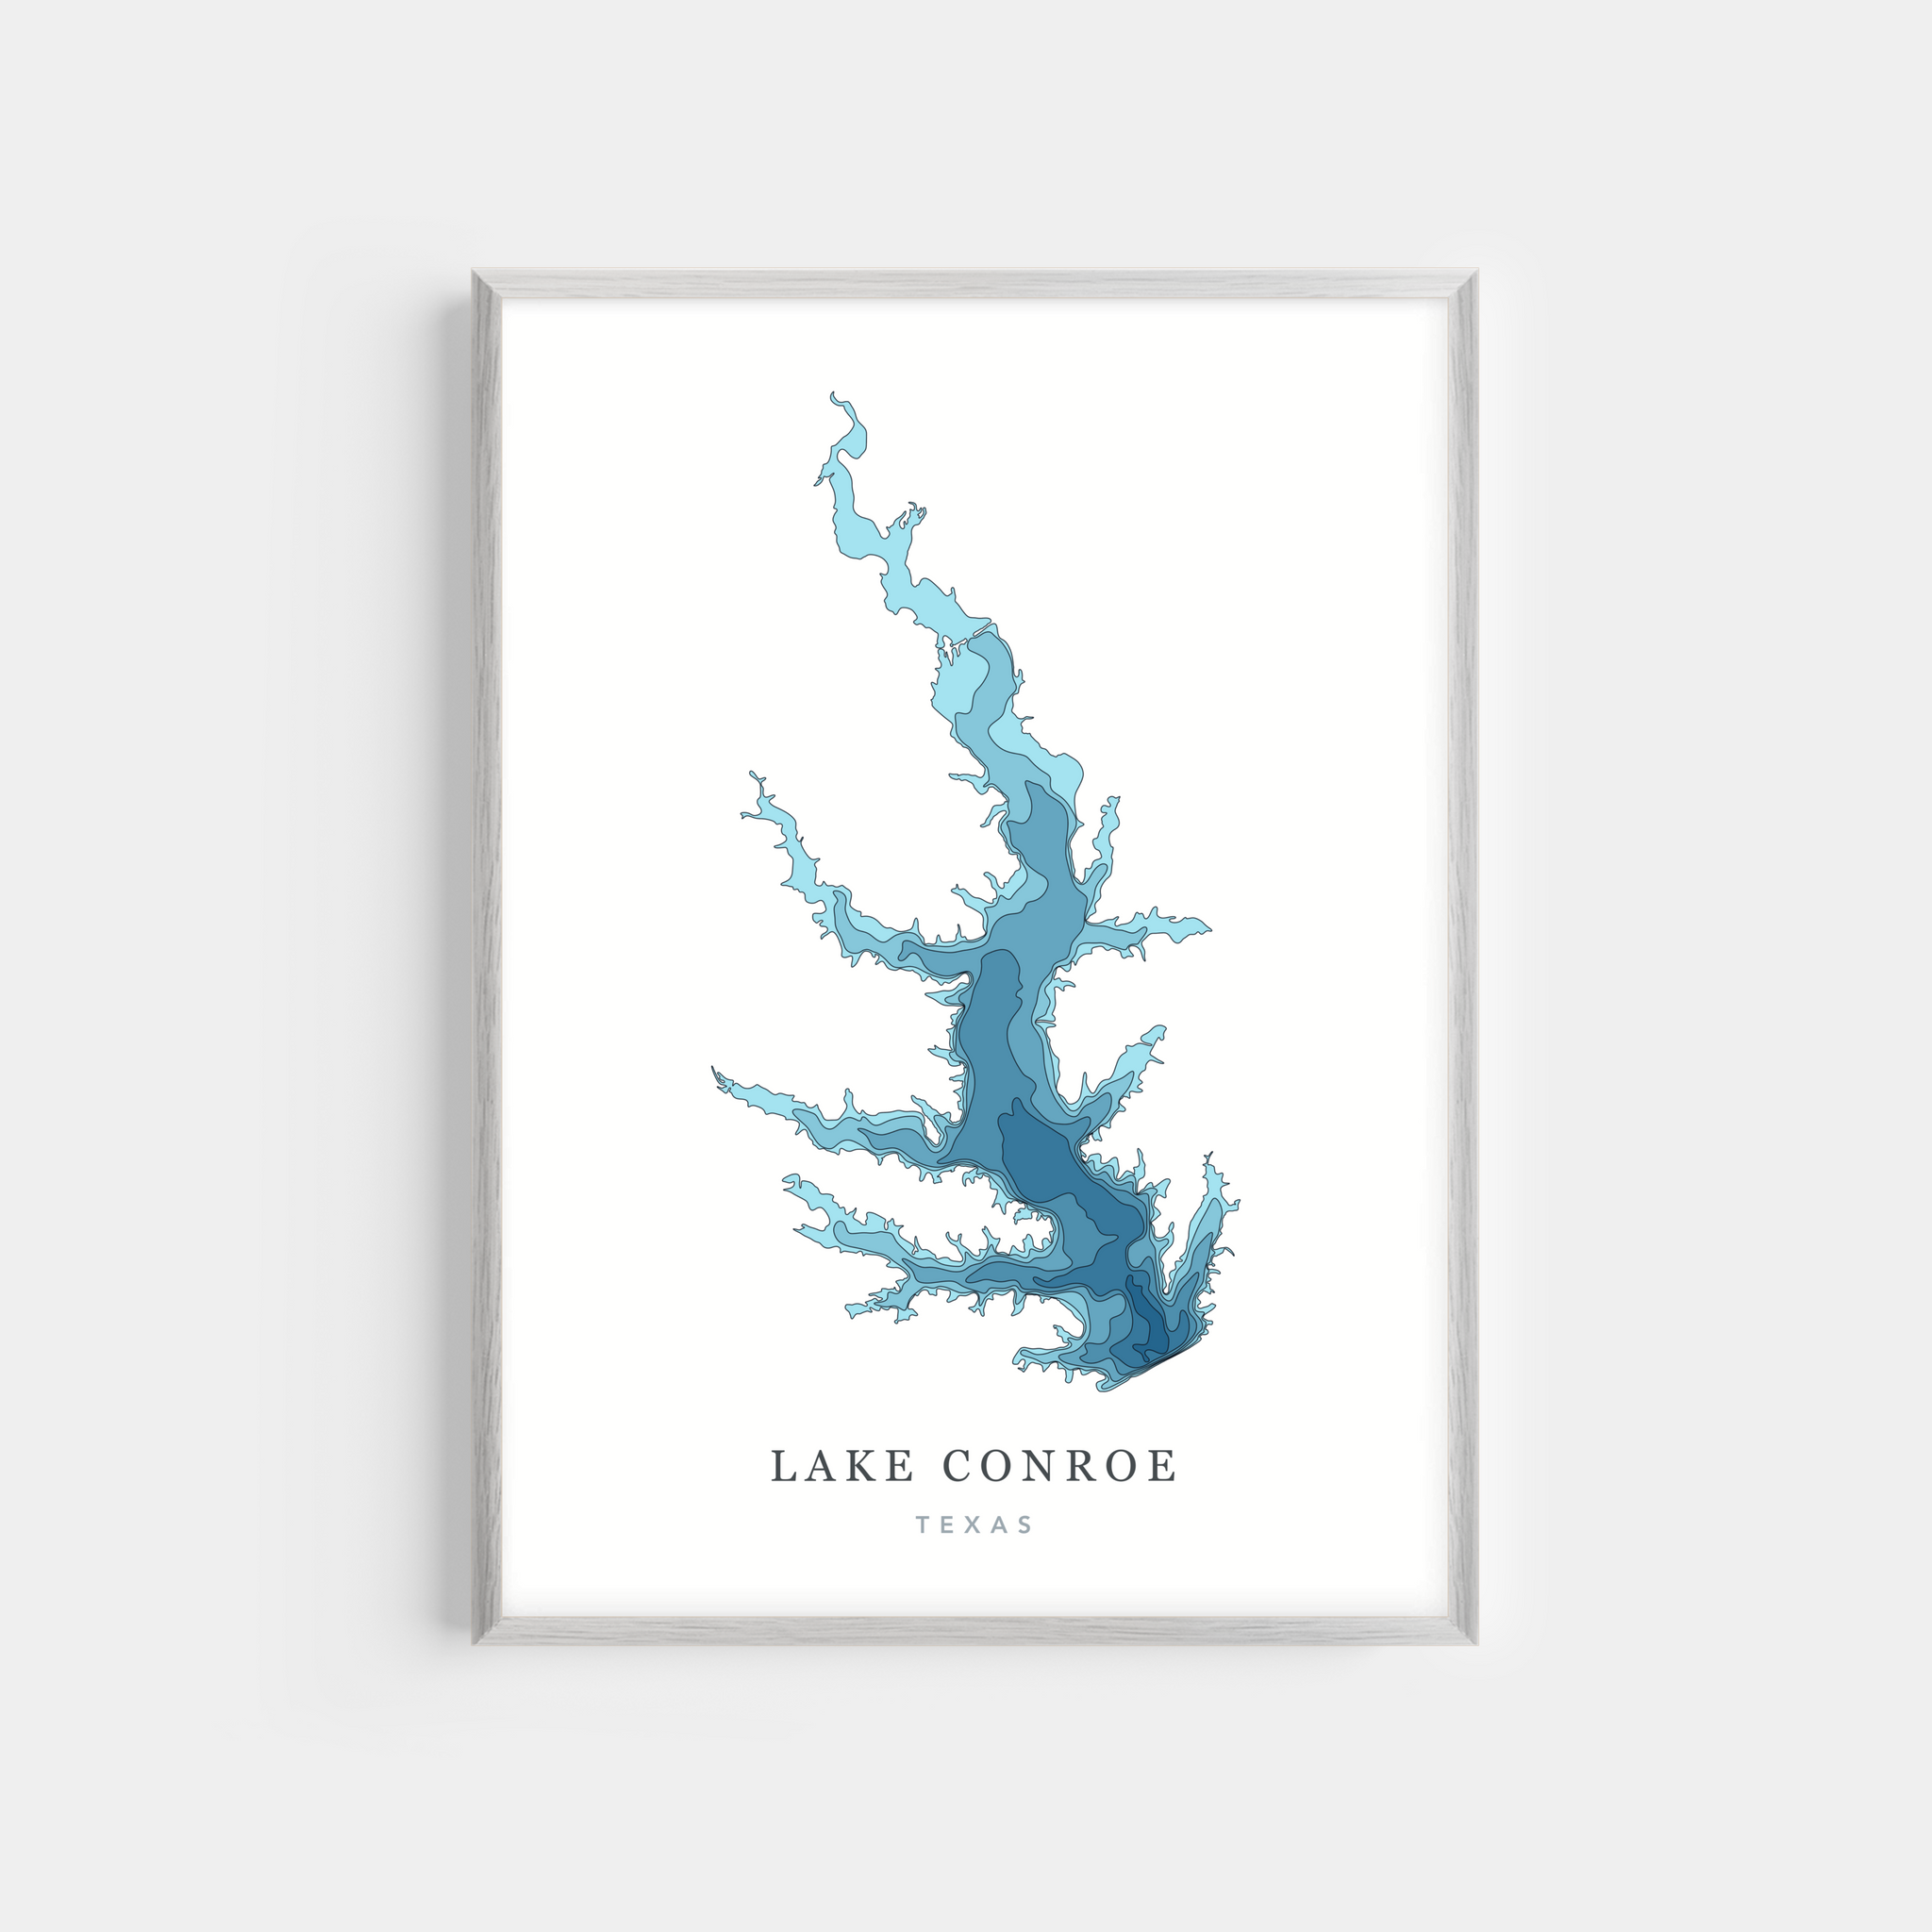 Lake Conroe, Texas | Photo Print